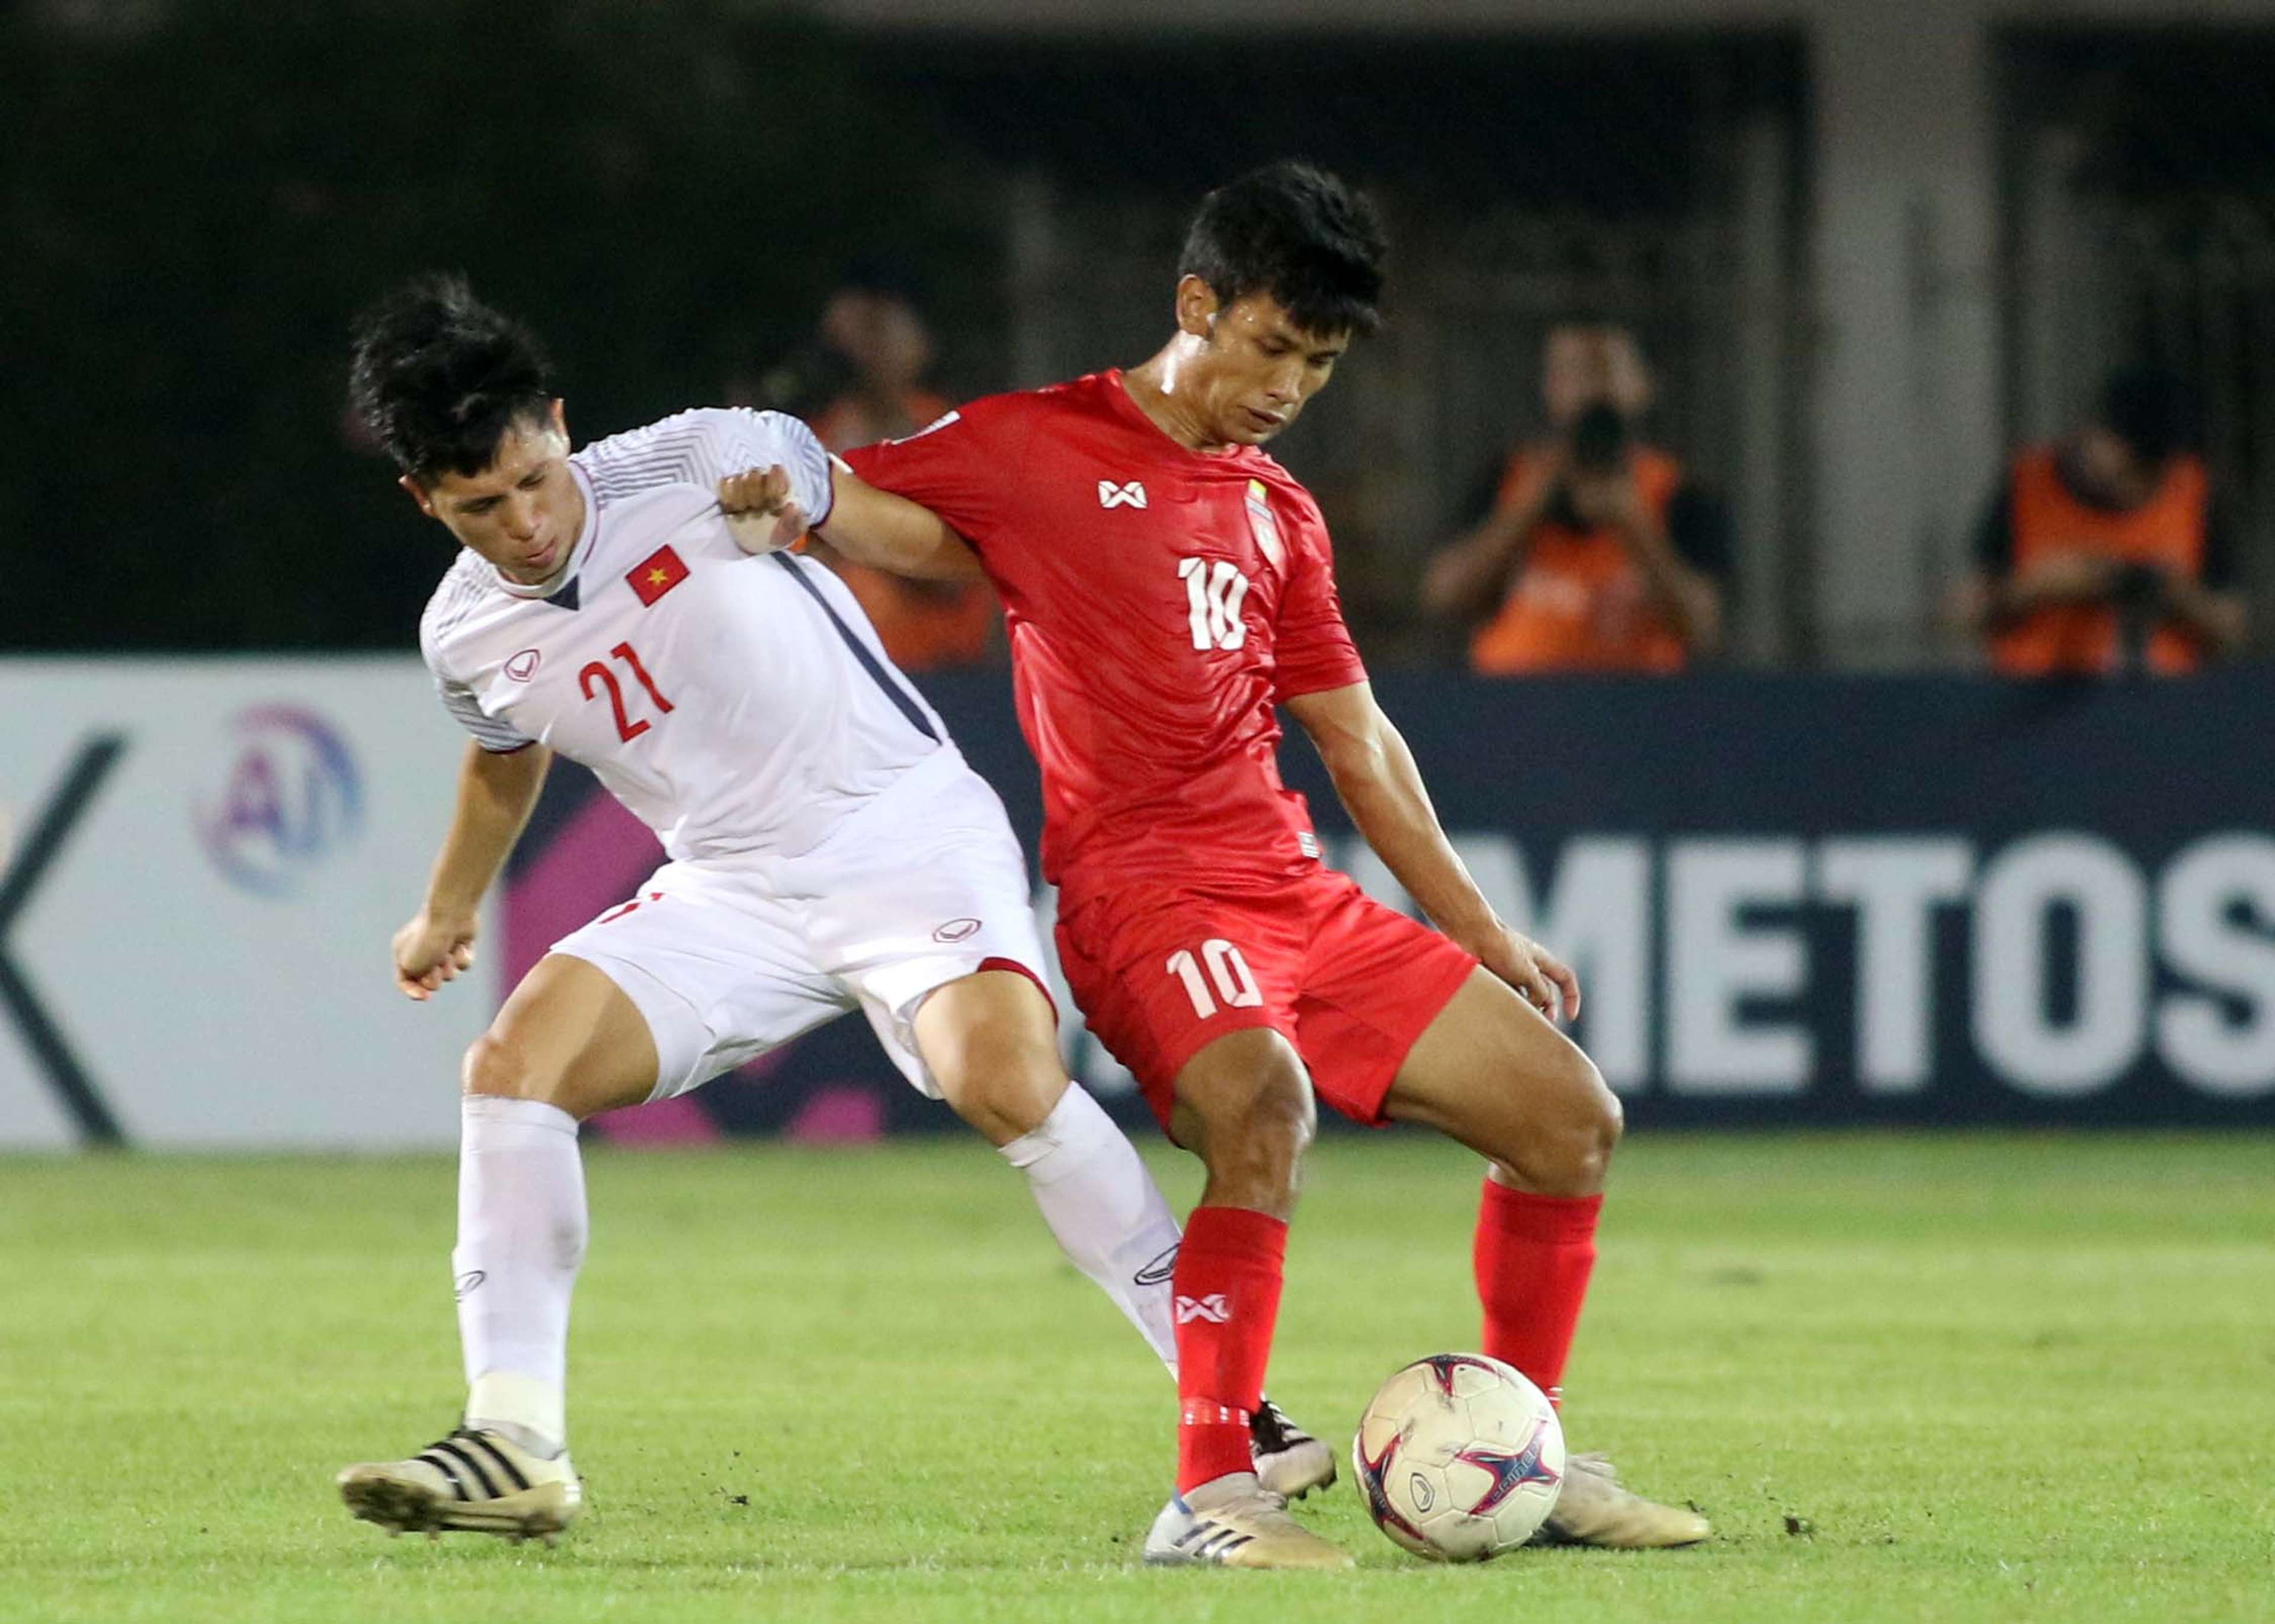 Đình Trọng - Myanmar vs Vietnam AFF Suzuki Cup 2018